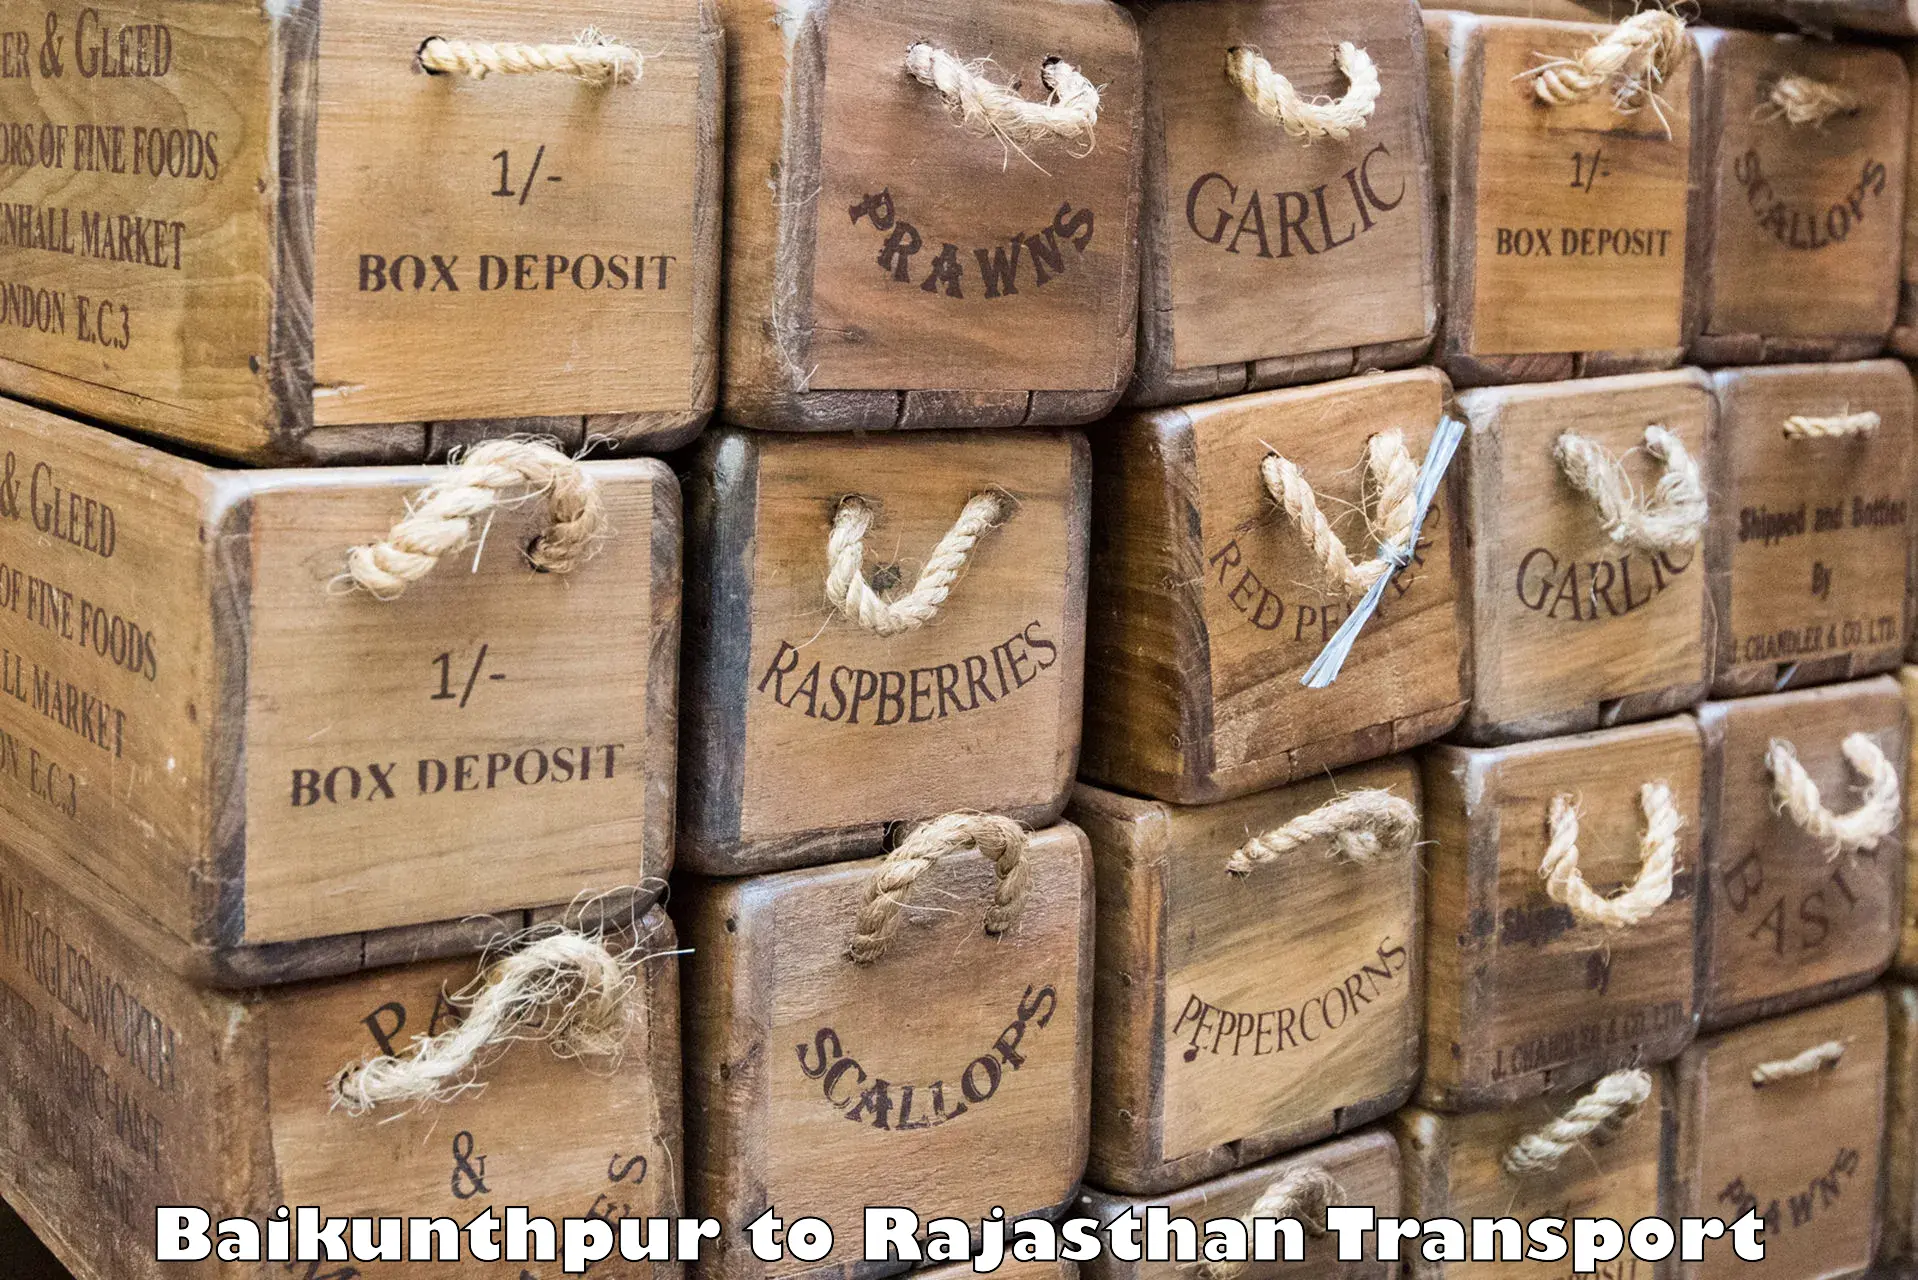 Road transport services in Baikunthpur to Tonk